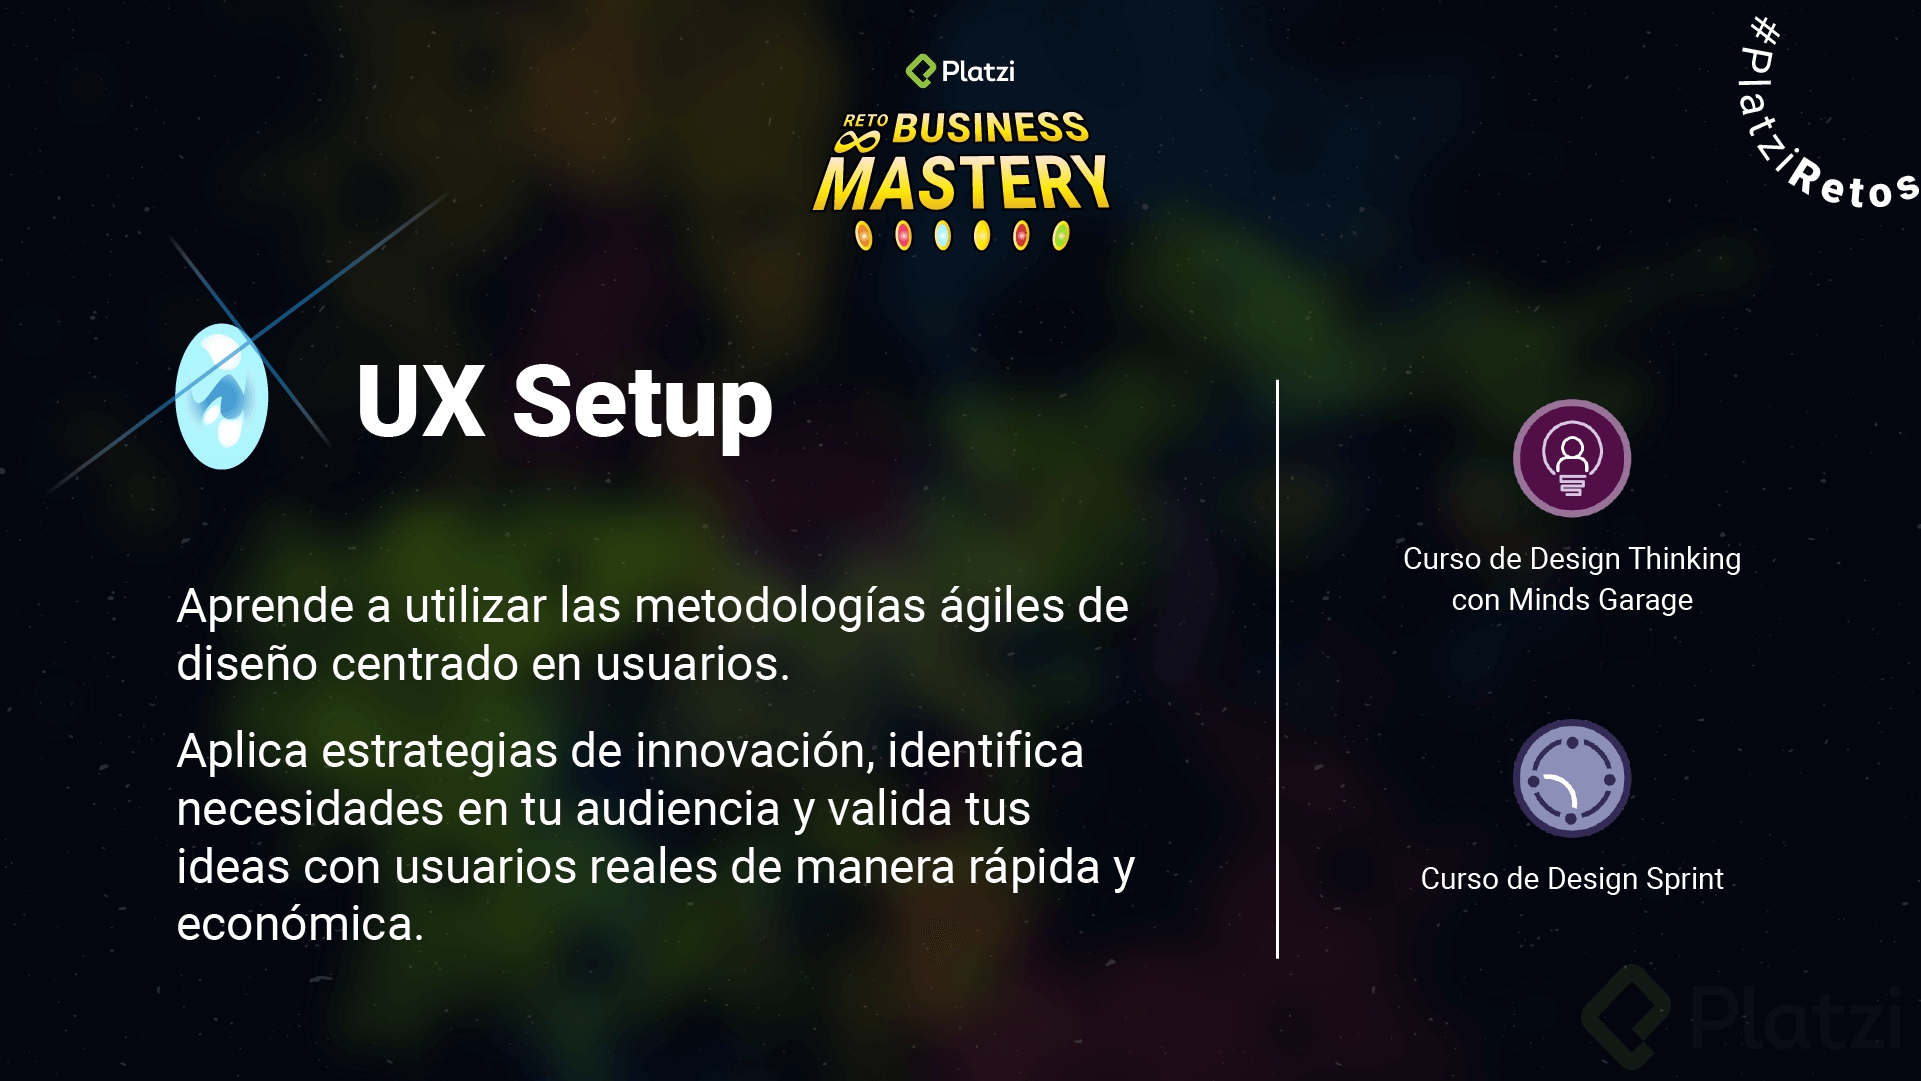 reto-business-mastery_16-9-ux-setup.png